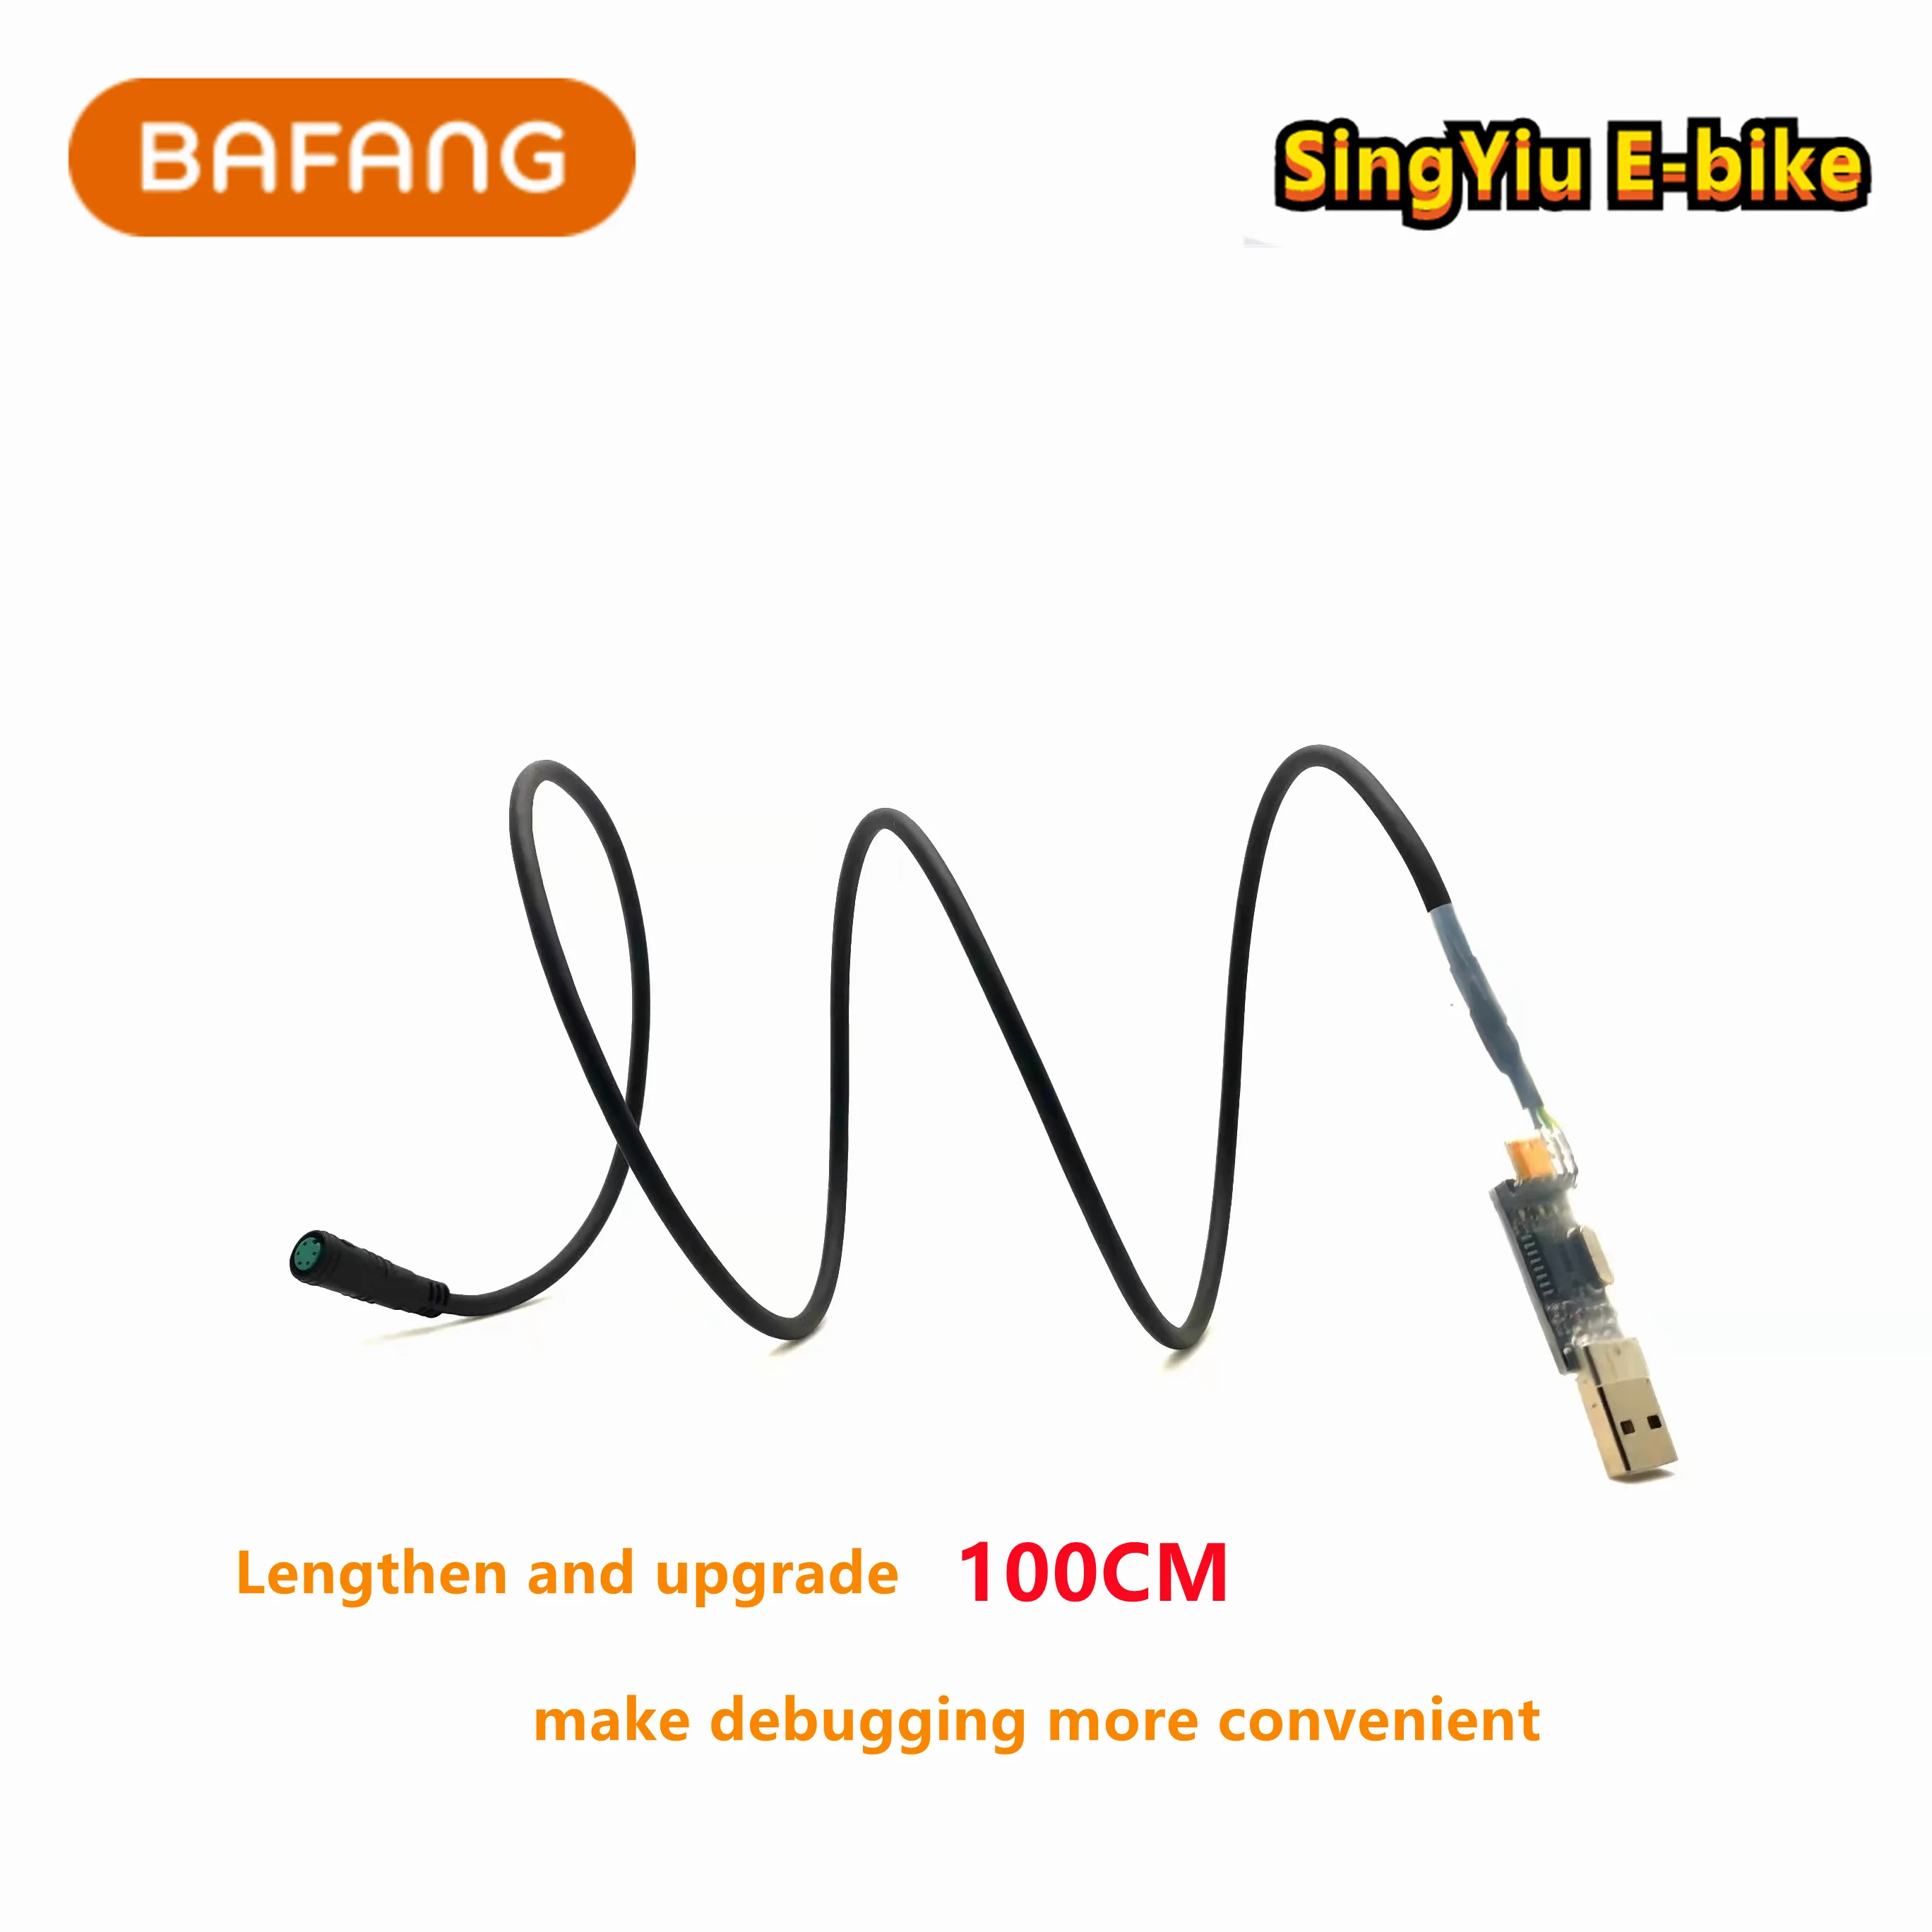 Bafang USB-programmeringskabel til 8fun / BBS01B BBS02B BBSHD Mid Drive / Center elektrisk cykelmotor programmeret kabel